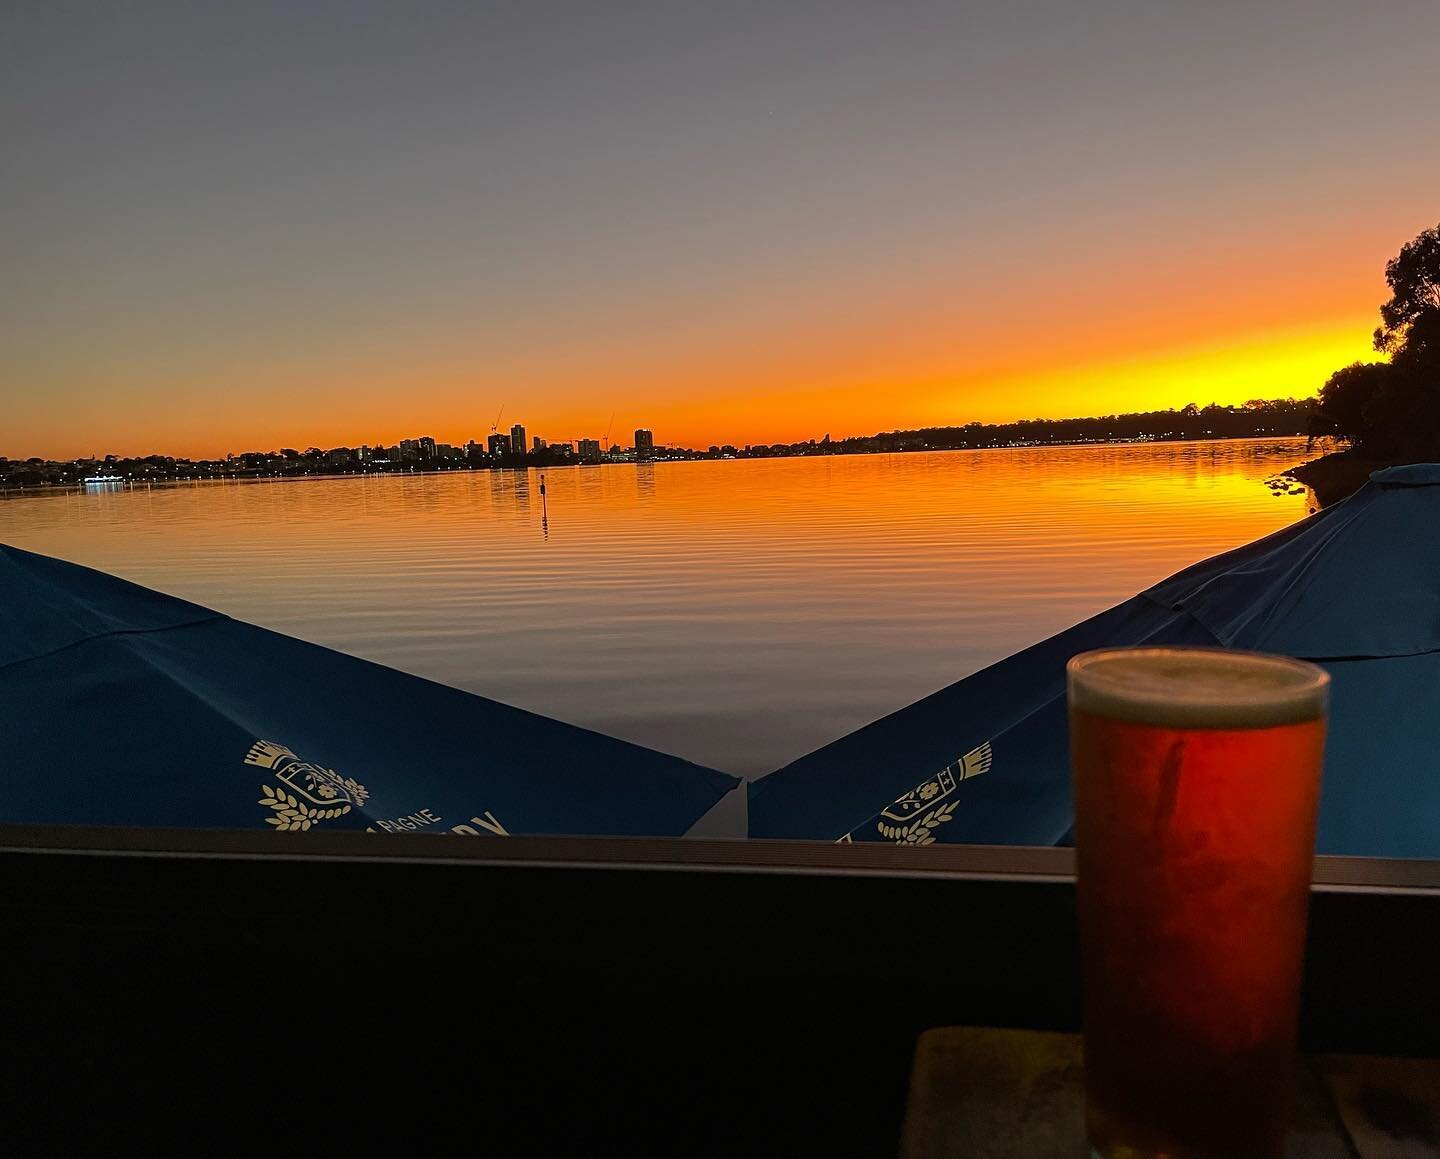 Friday beers and this view!
.
.
.
#longneckbrewery #perthsunset #justanotherdayinwa #westernaustralia #perthlife #perthbrewery #swanriver #perthisok